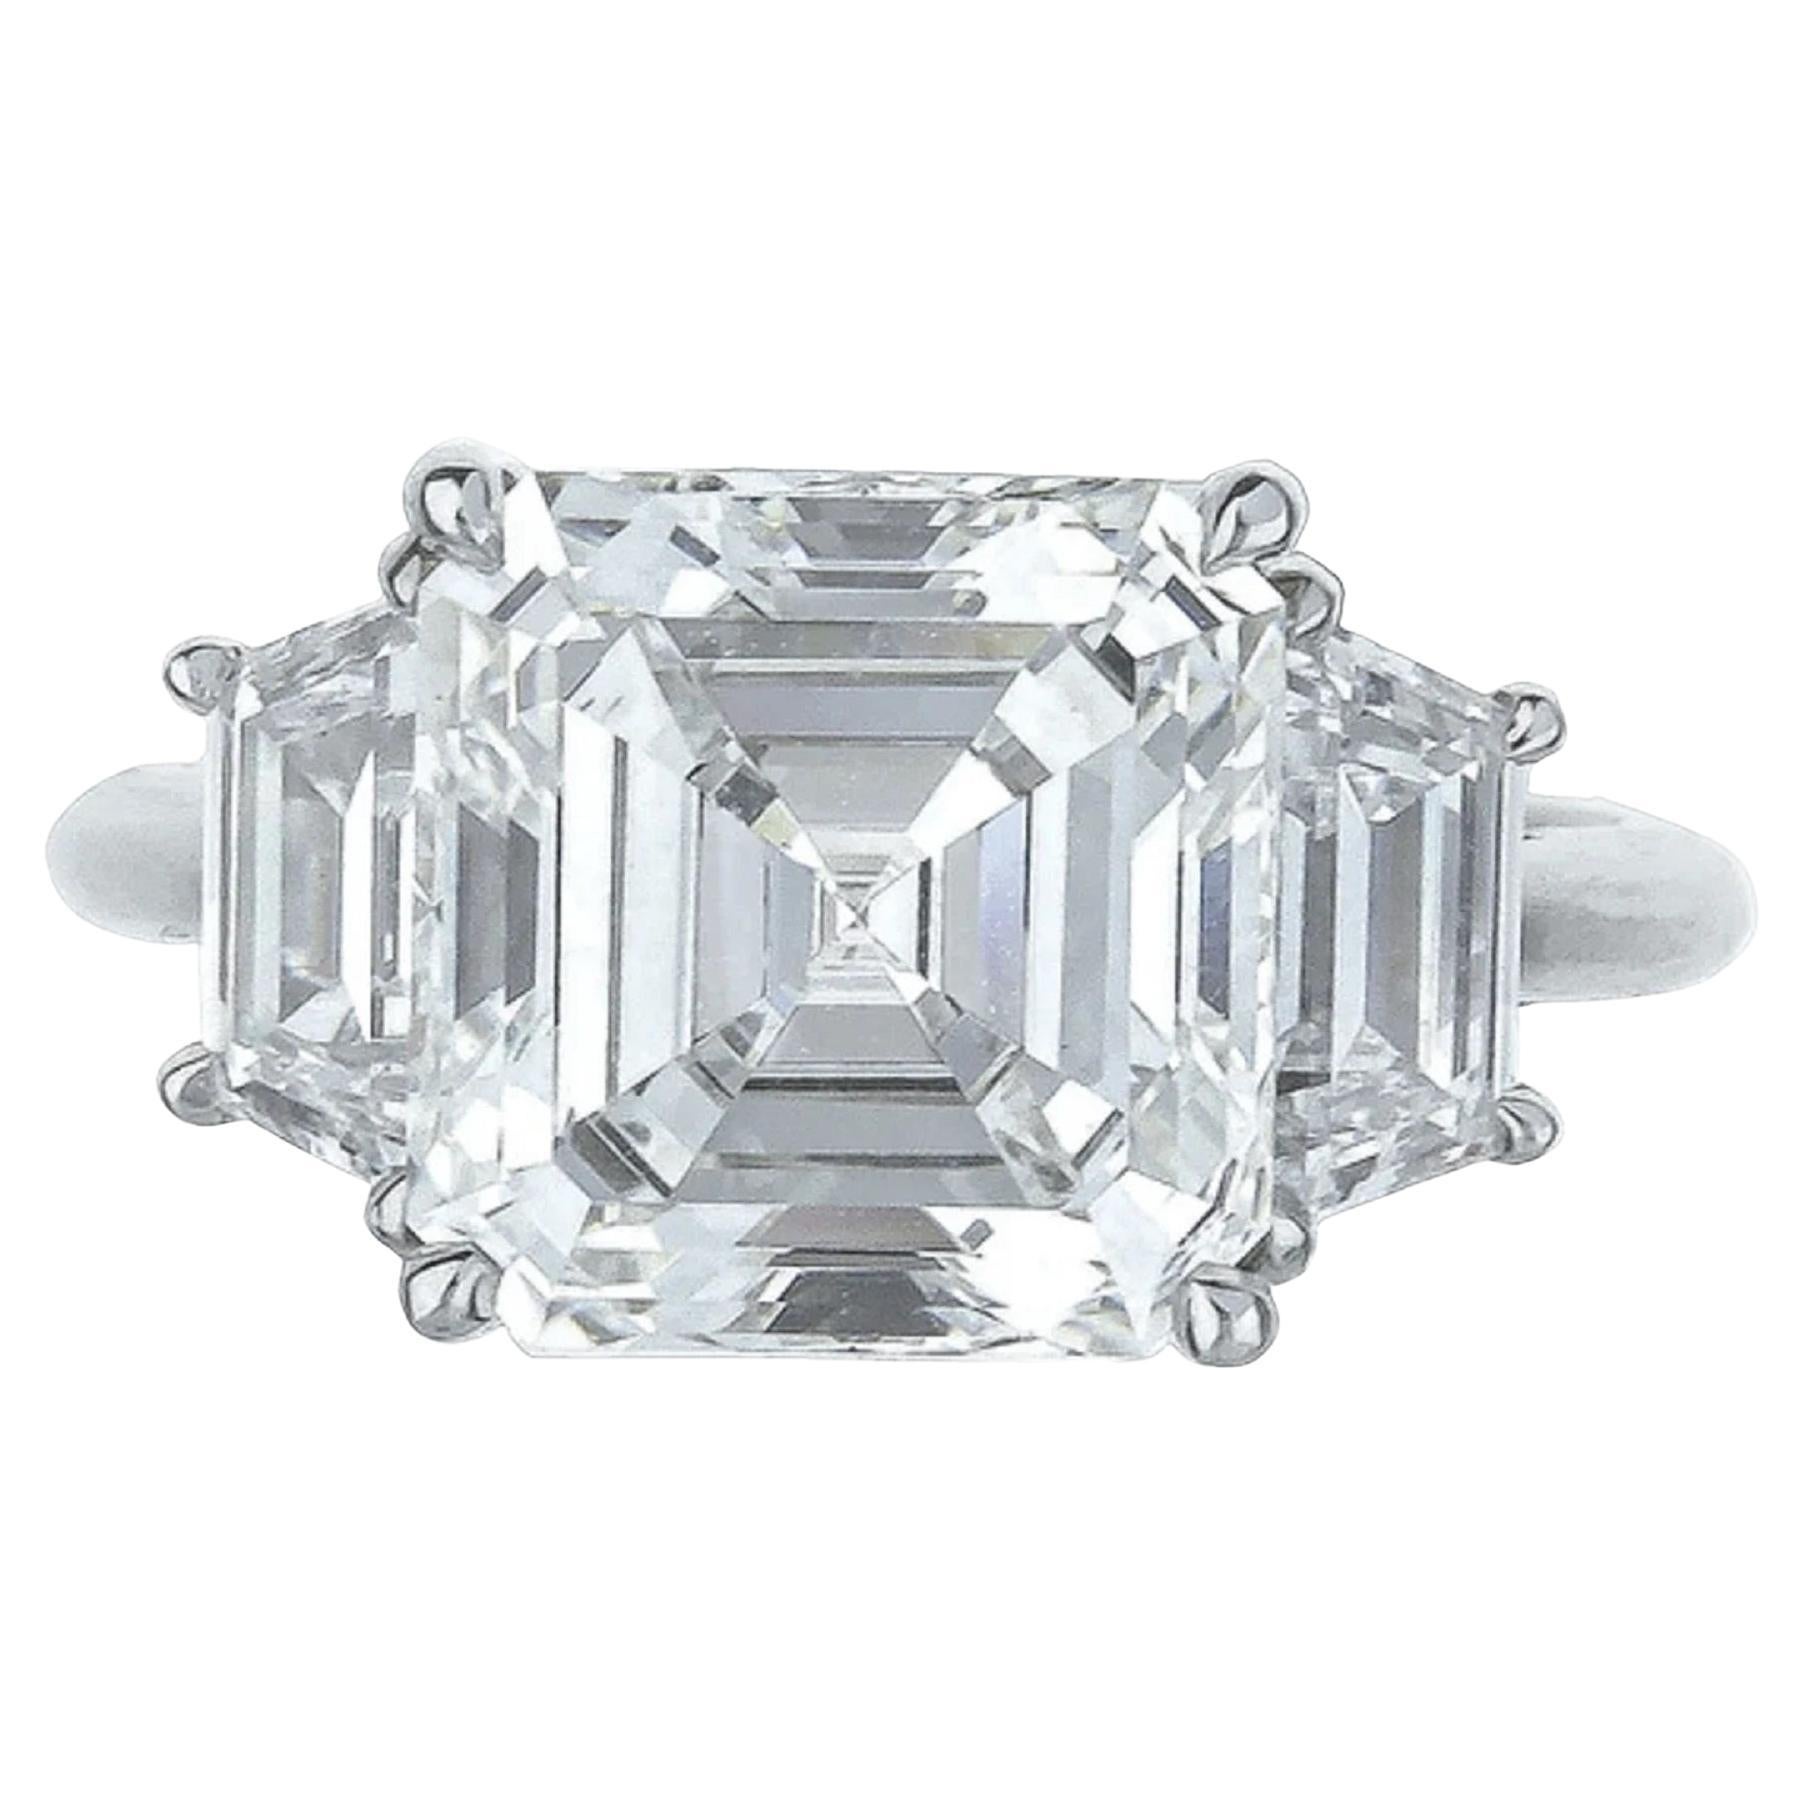 GIA Certified 4 Carat Asscher Cut Diamond Flawless Clarity For Sale